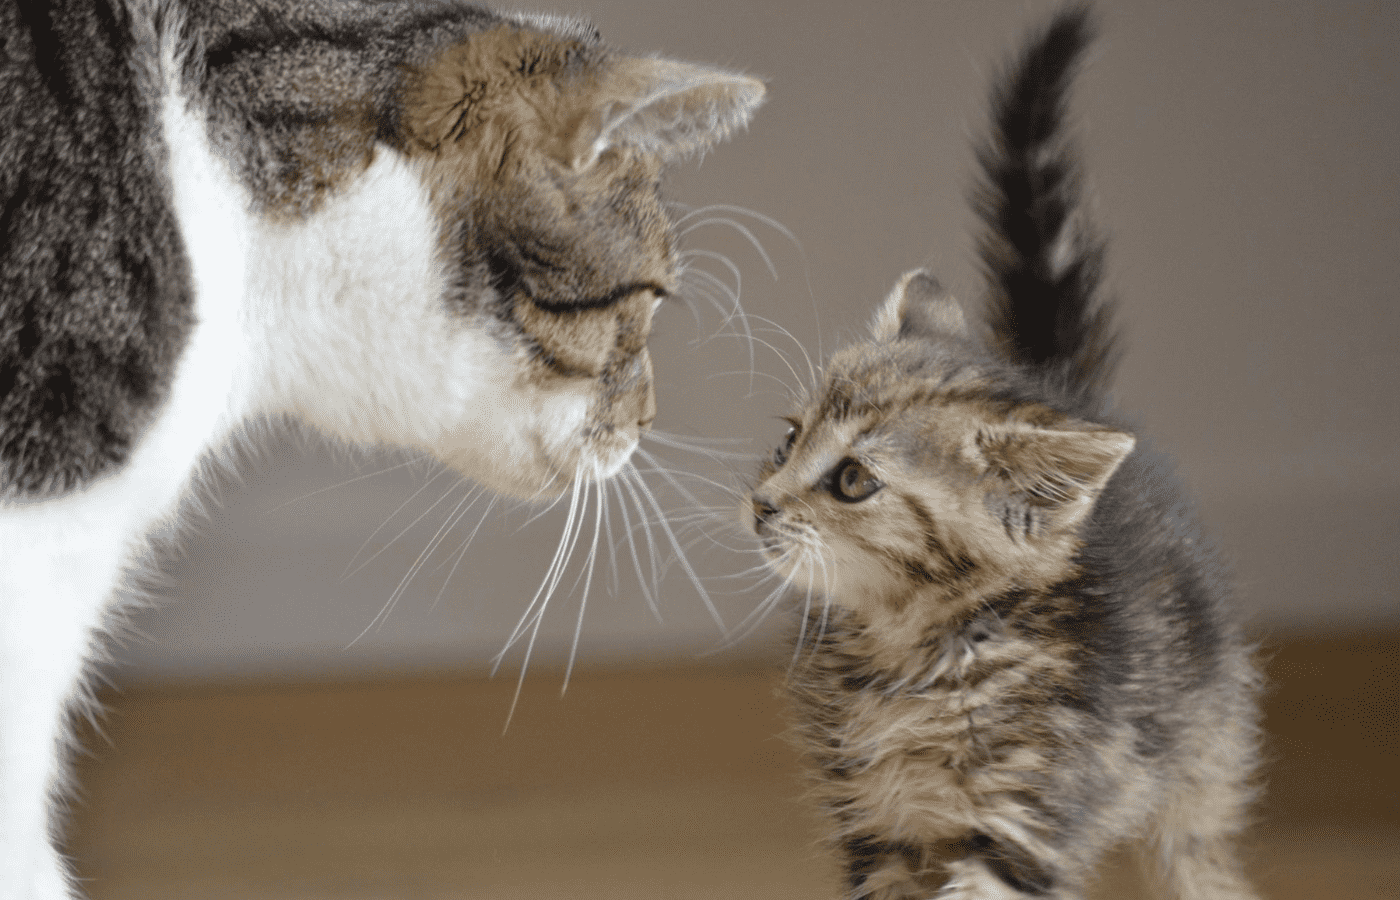 Adult cat sniffing smaller kitten